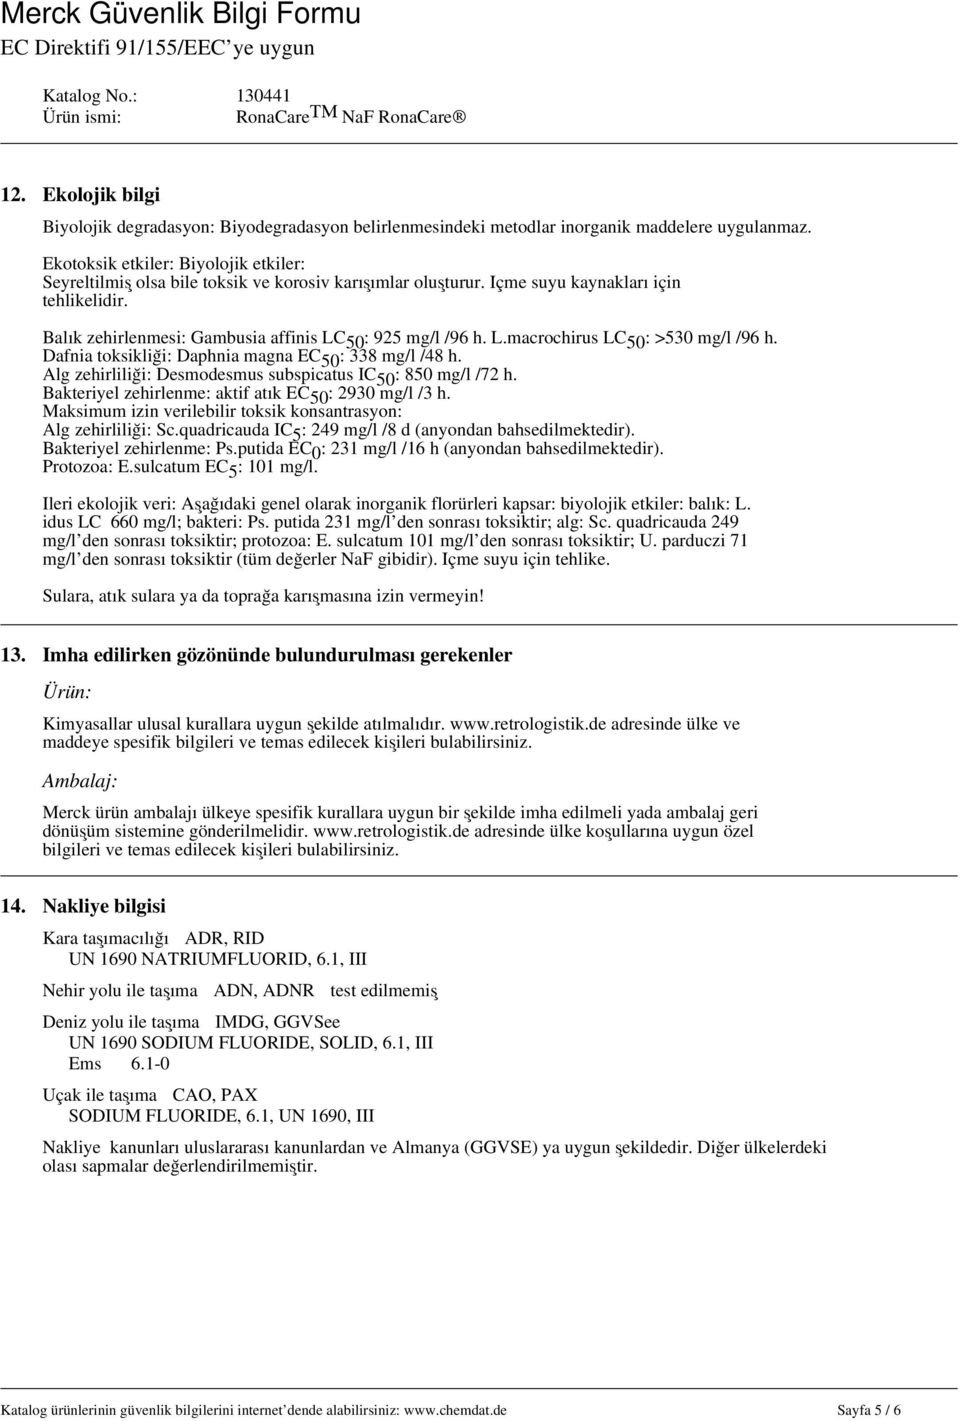 Balık zehirlenmesi: Gambusia affinis LC 50 : 925 mg/l /96 h. L.macrochirus LC 50 : >530 mg/l /96 h. Dafnia toksikliği: Daphnia magna EC 50 : 338 mg/l /48 h.